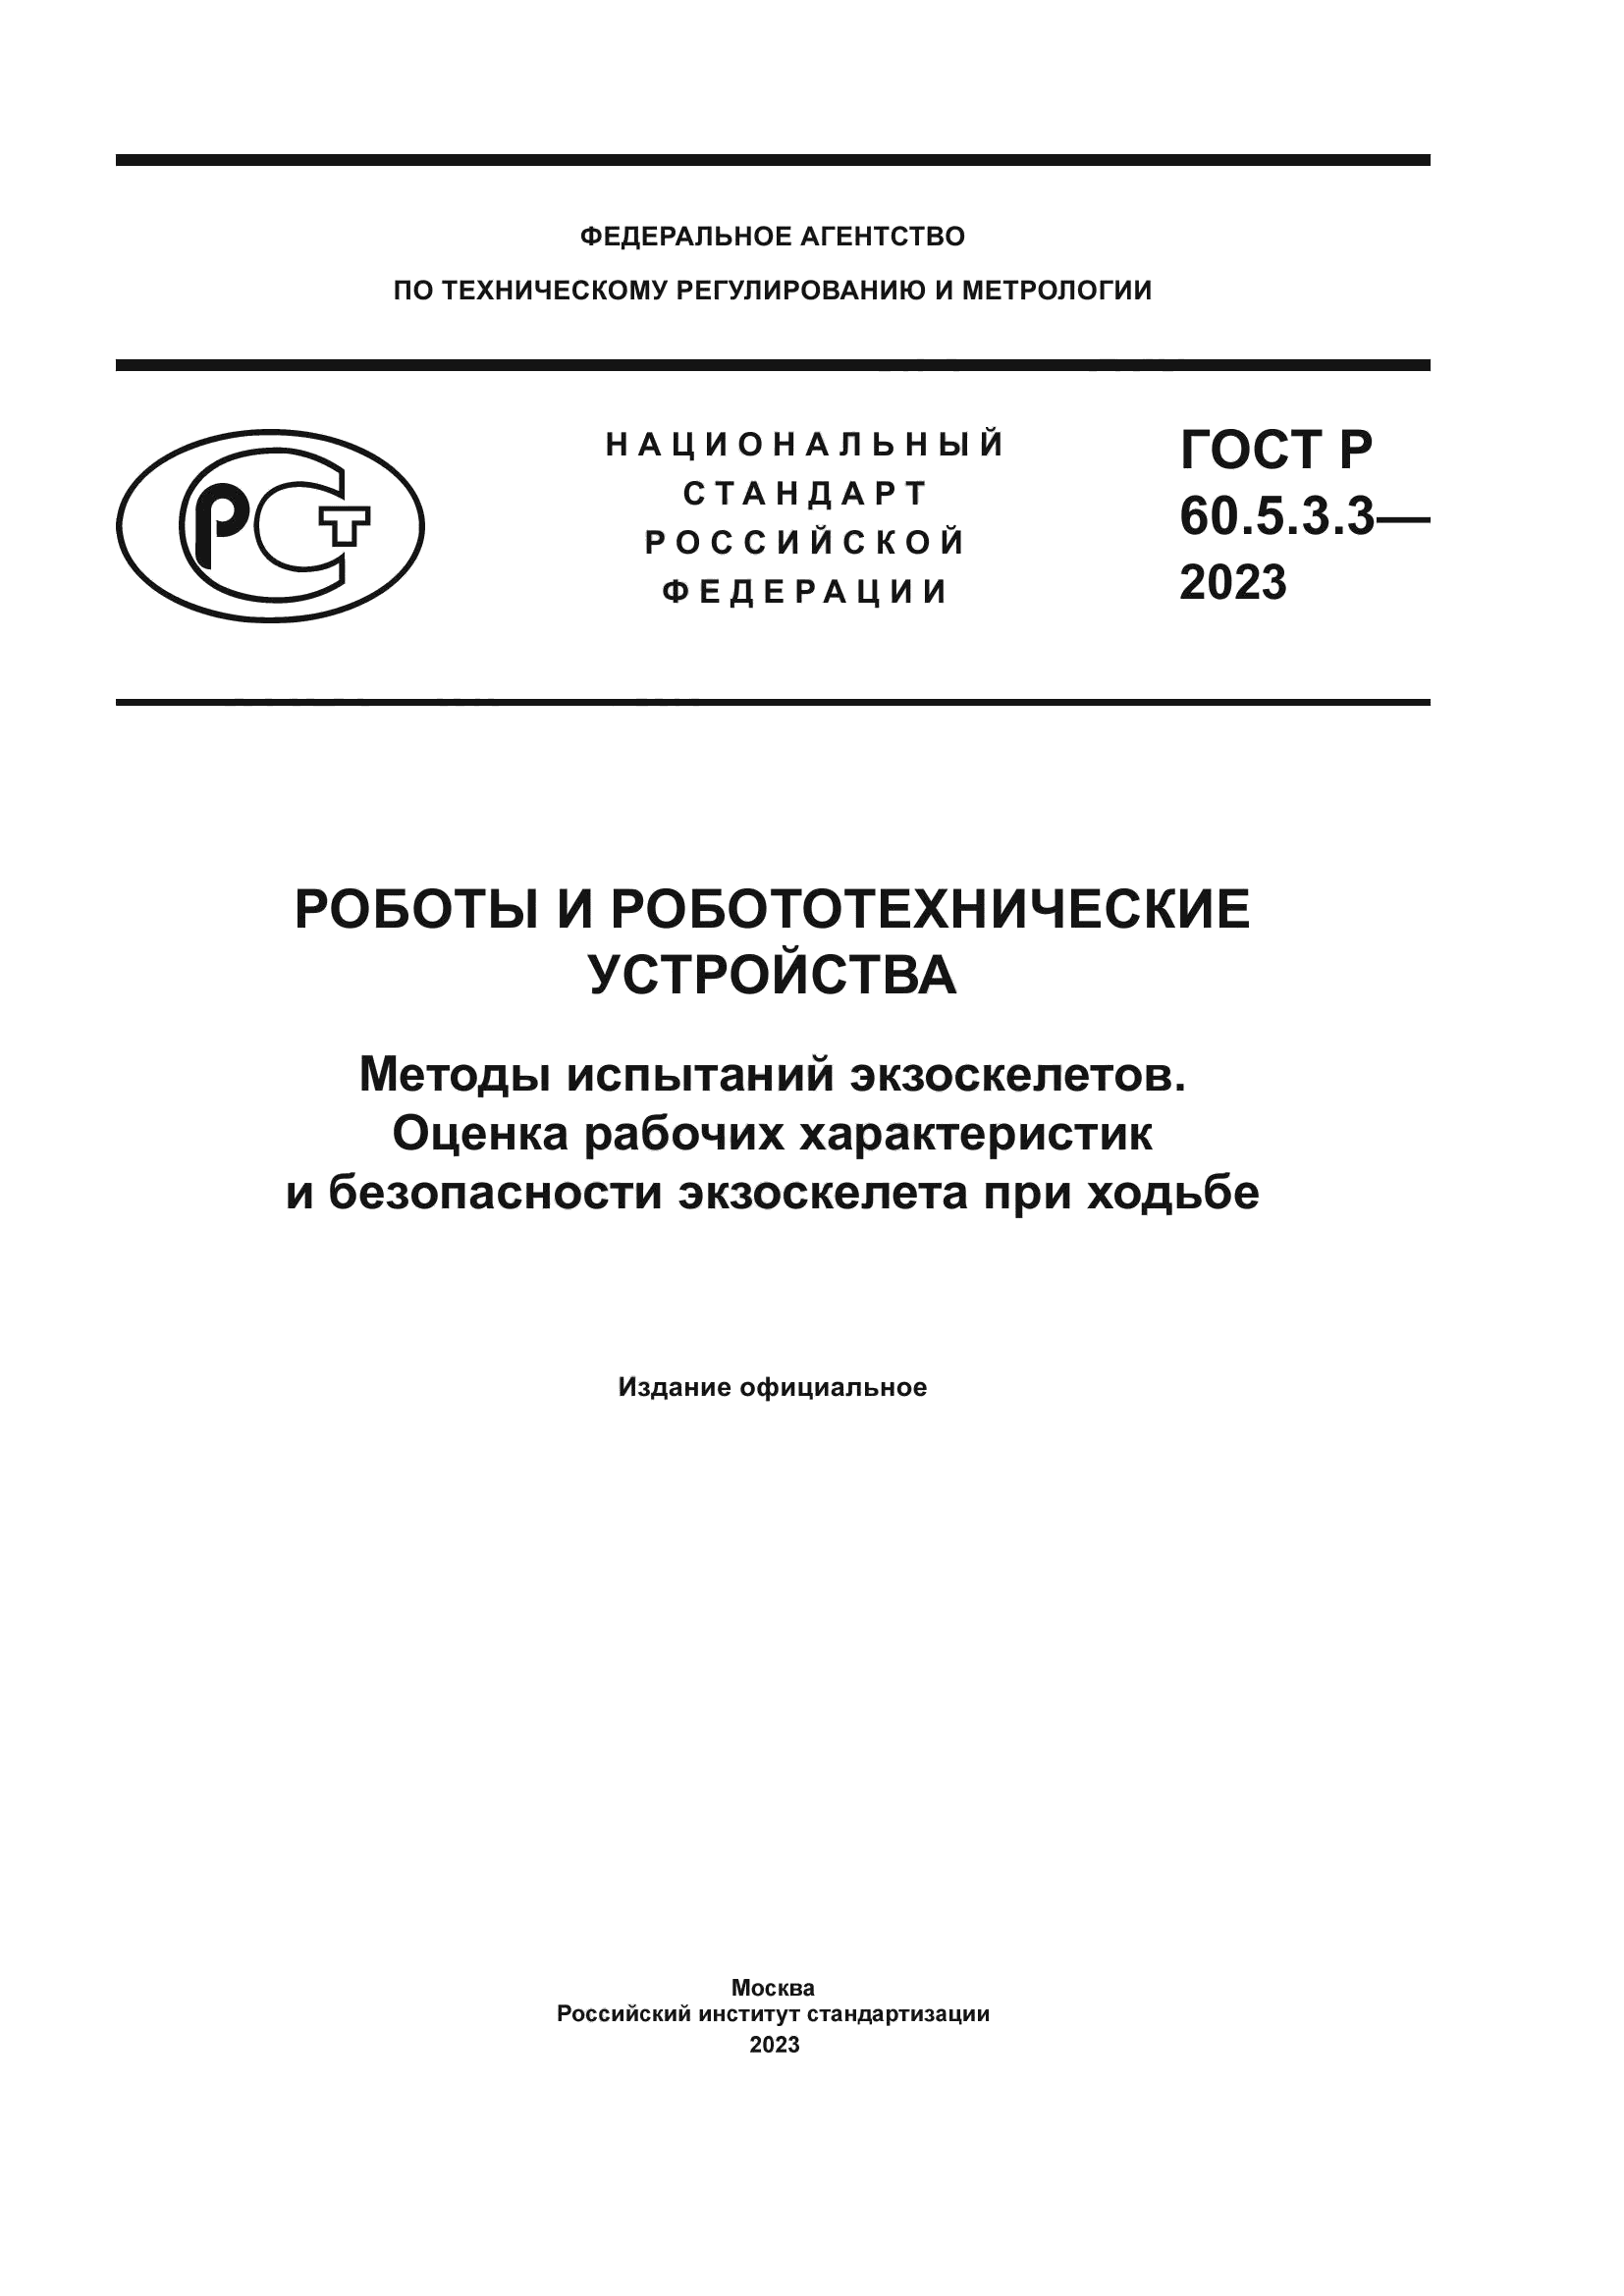 ГОСТ Р 60.5.3.3-2023